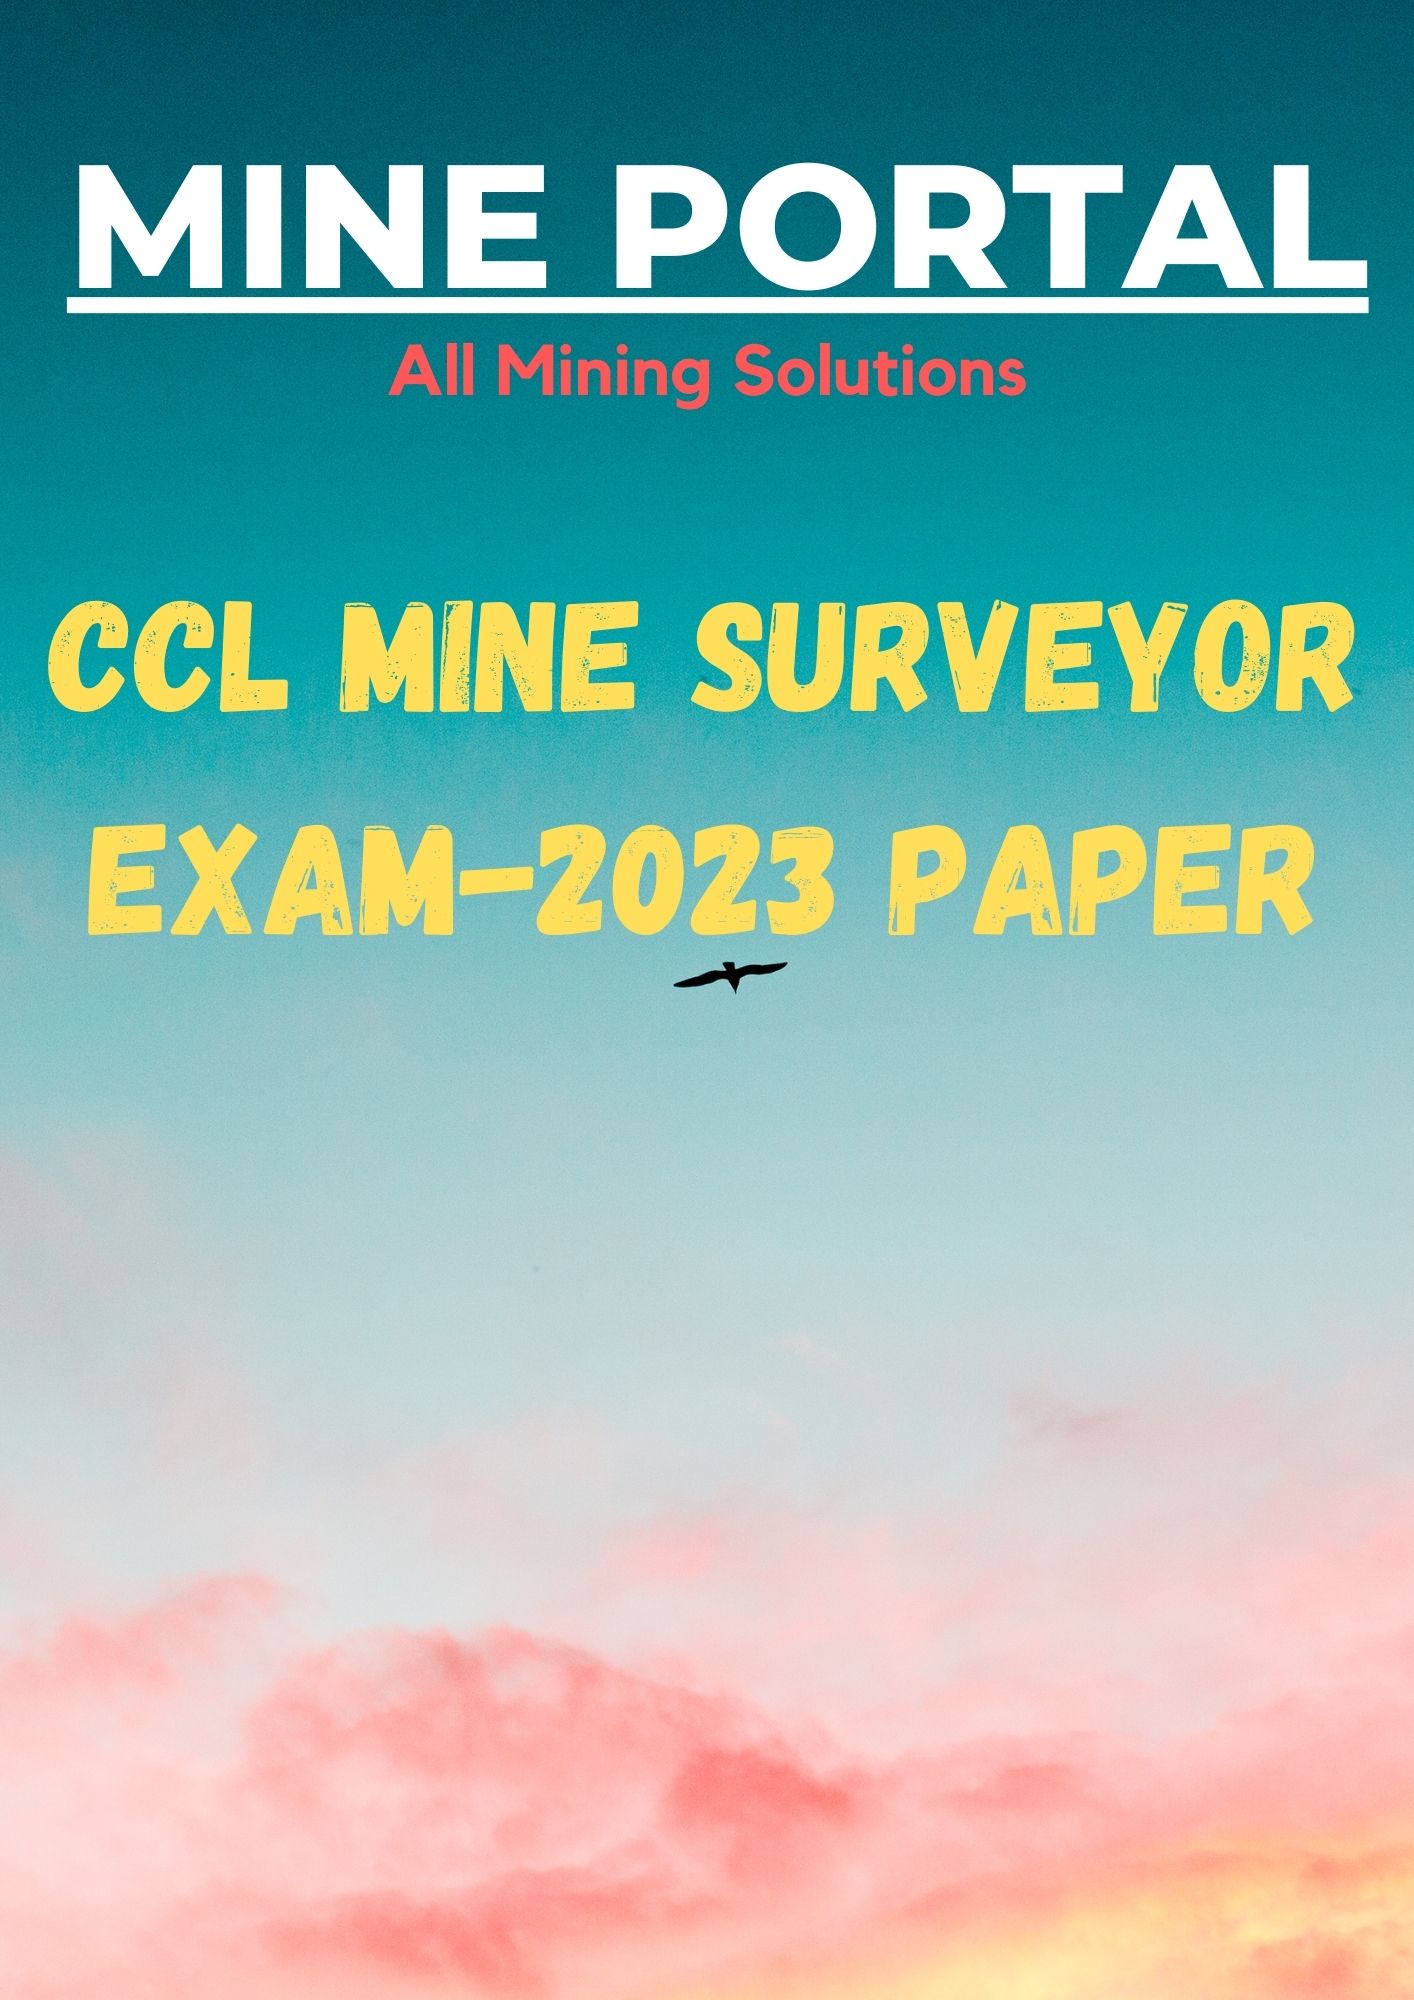 CCL MINE SURVEYOR EXAM-2023 PAPER